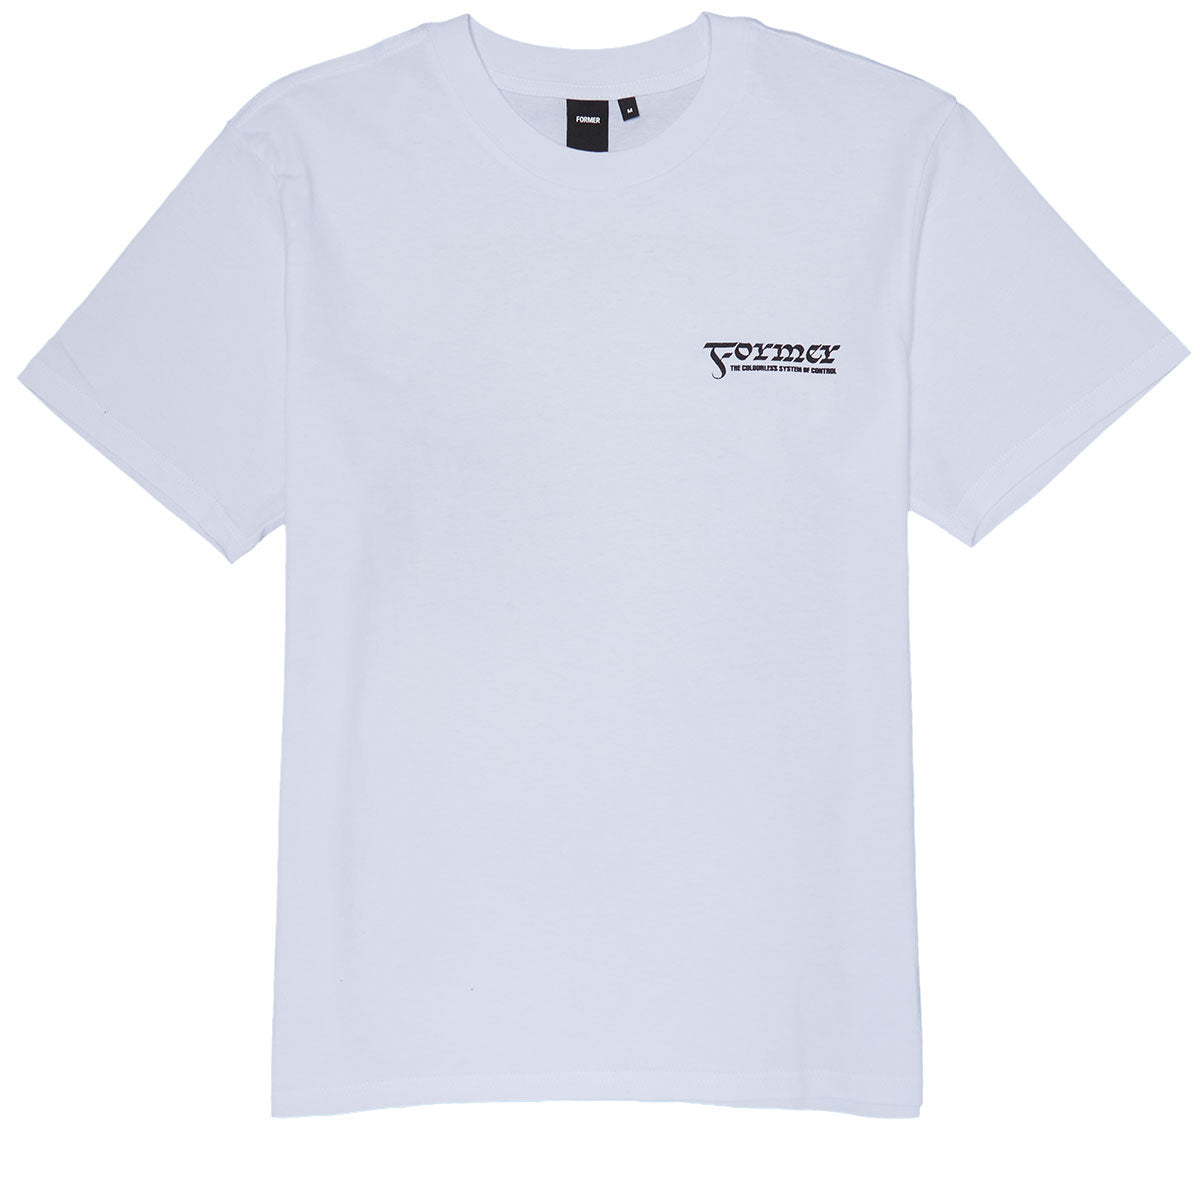 Former Crux Tribute T-Shirt - White image 2